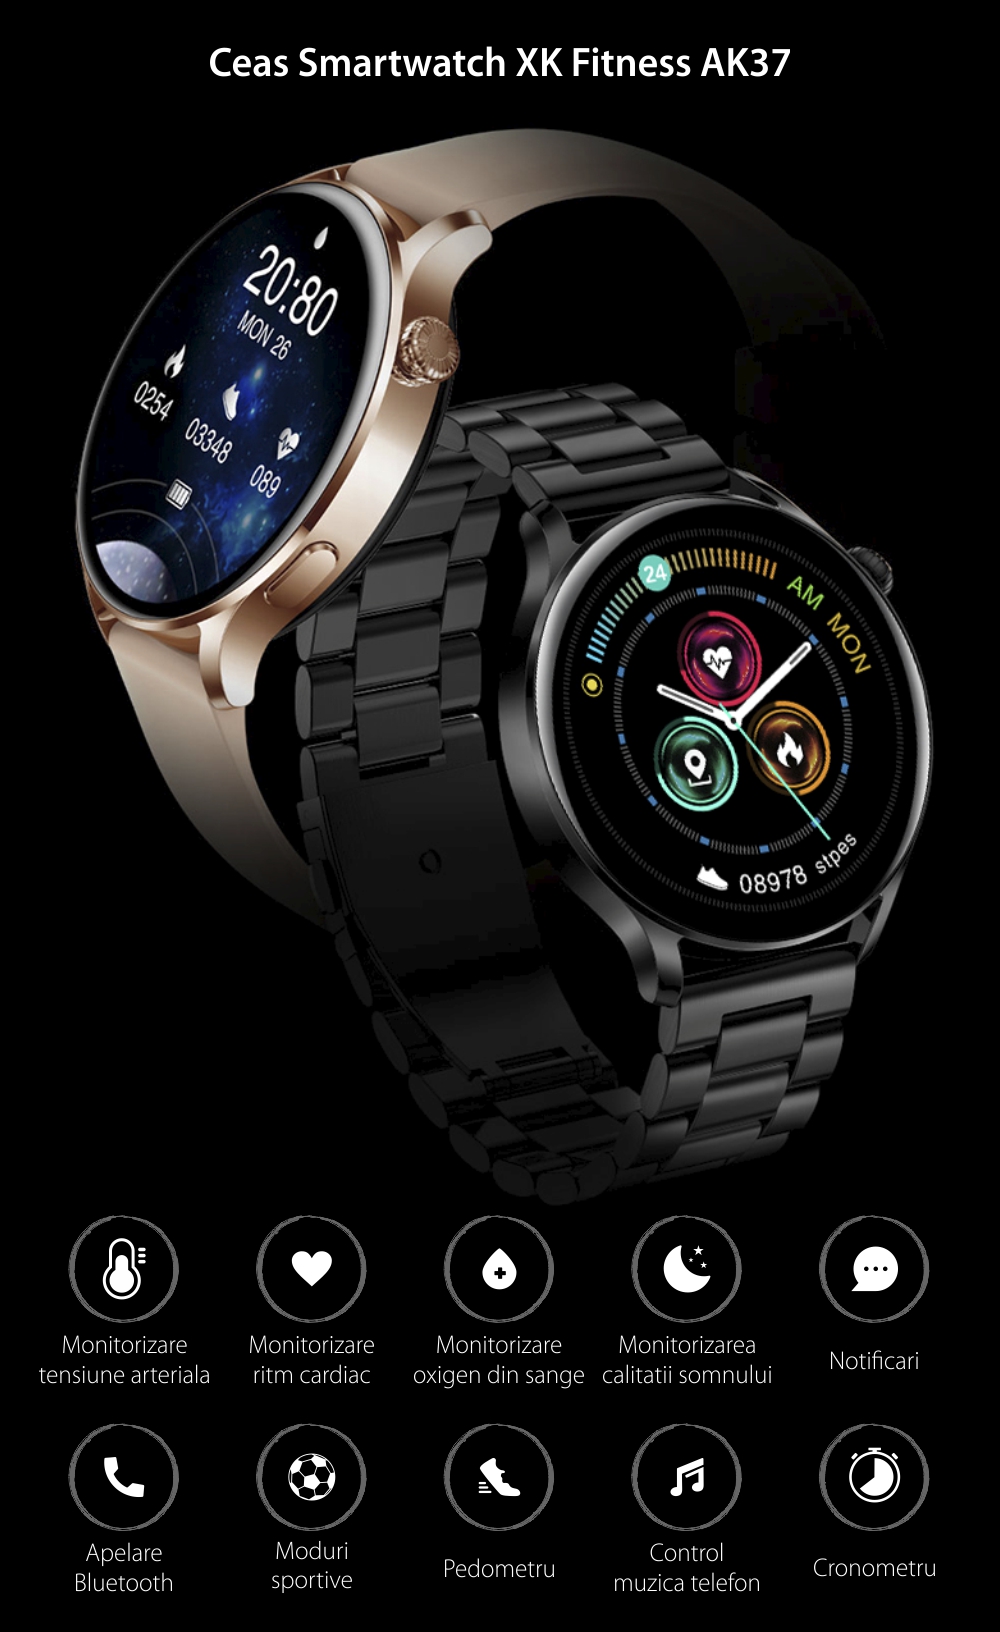 Ceas Smartwatch XK Fitness AK37 cu Functii monitorizare sanatate, Notificari, Bluetooth, Cronometru, Bratara otel, Argintiu